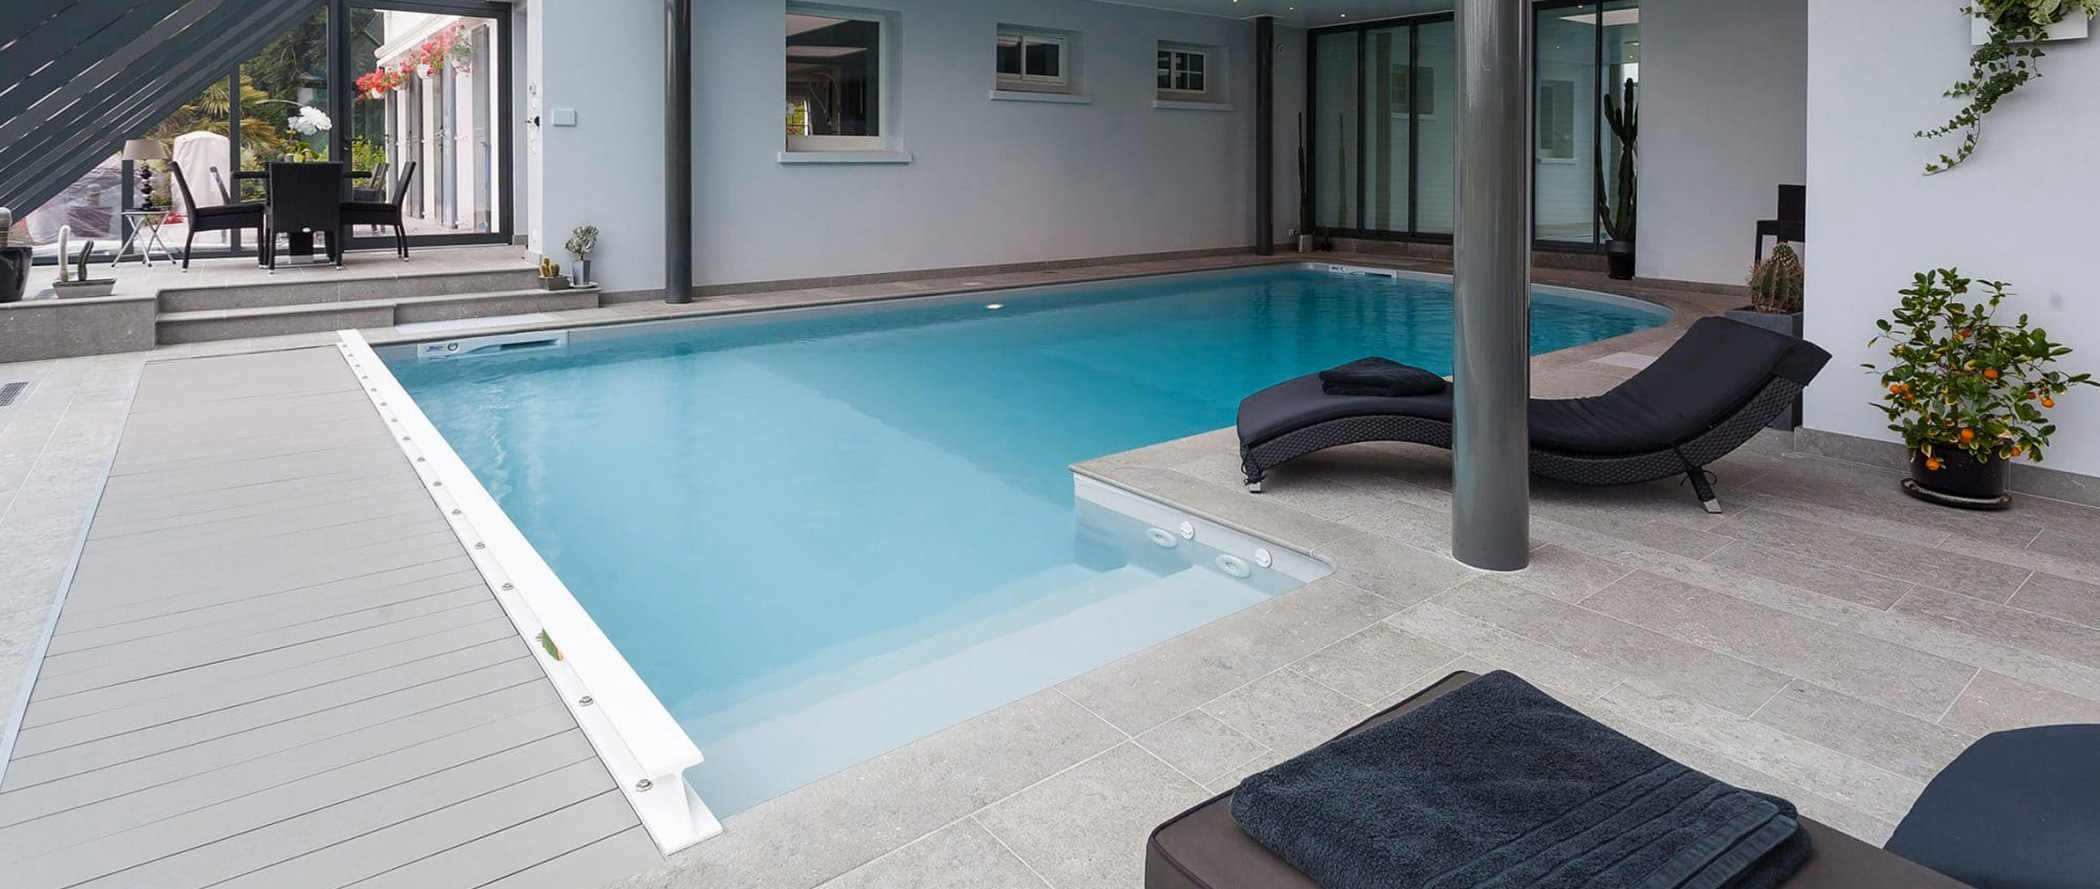 Indoor Swimming Pool Design & Build